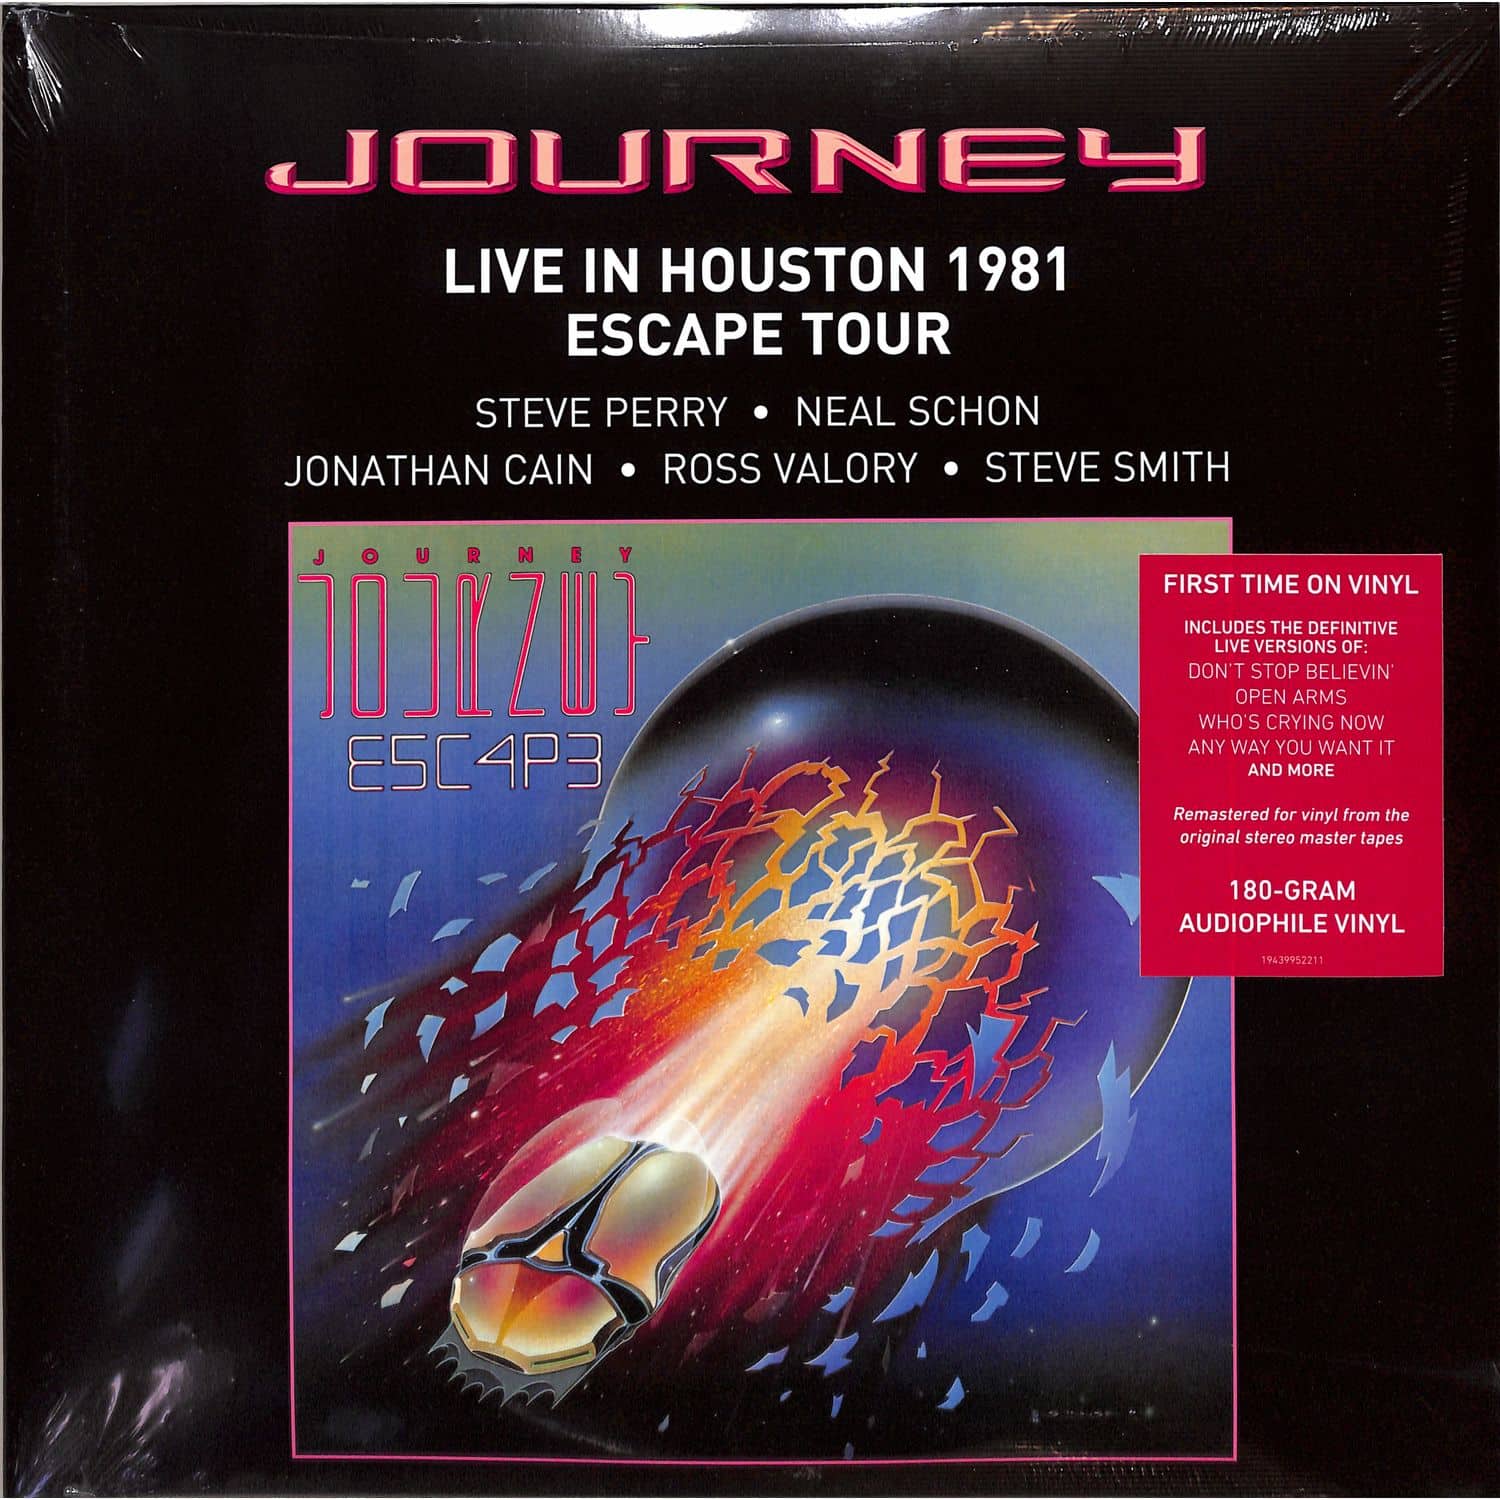 Journey - LIVE IN HOUSTON 1981: THE ESCAPE TOUR 